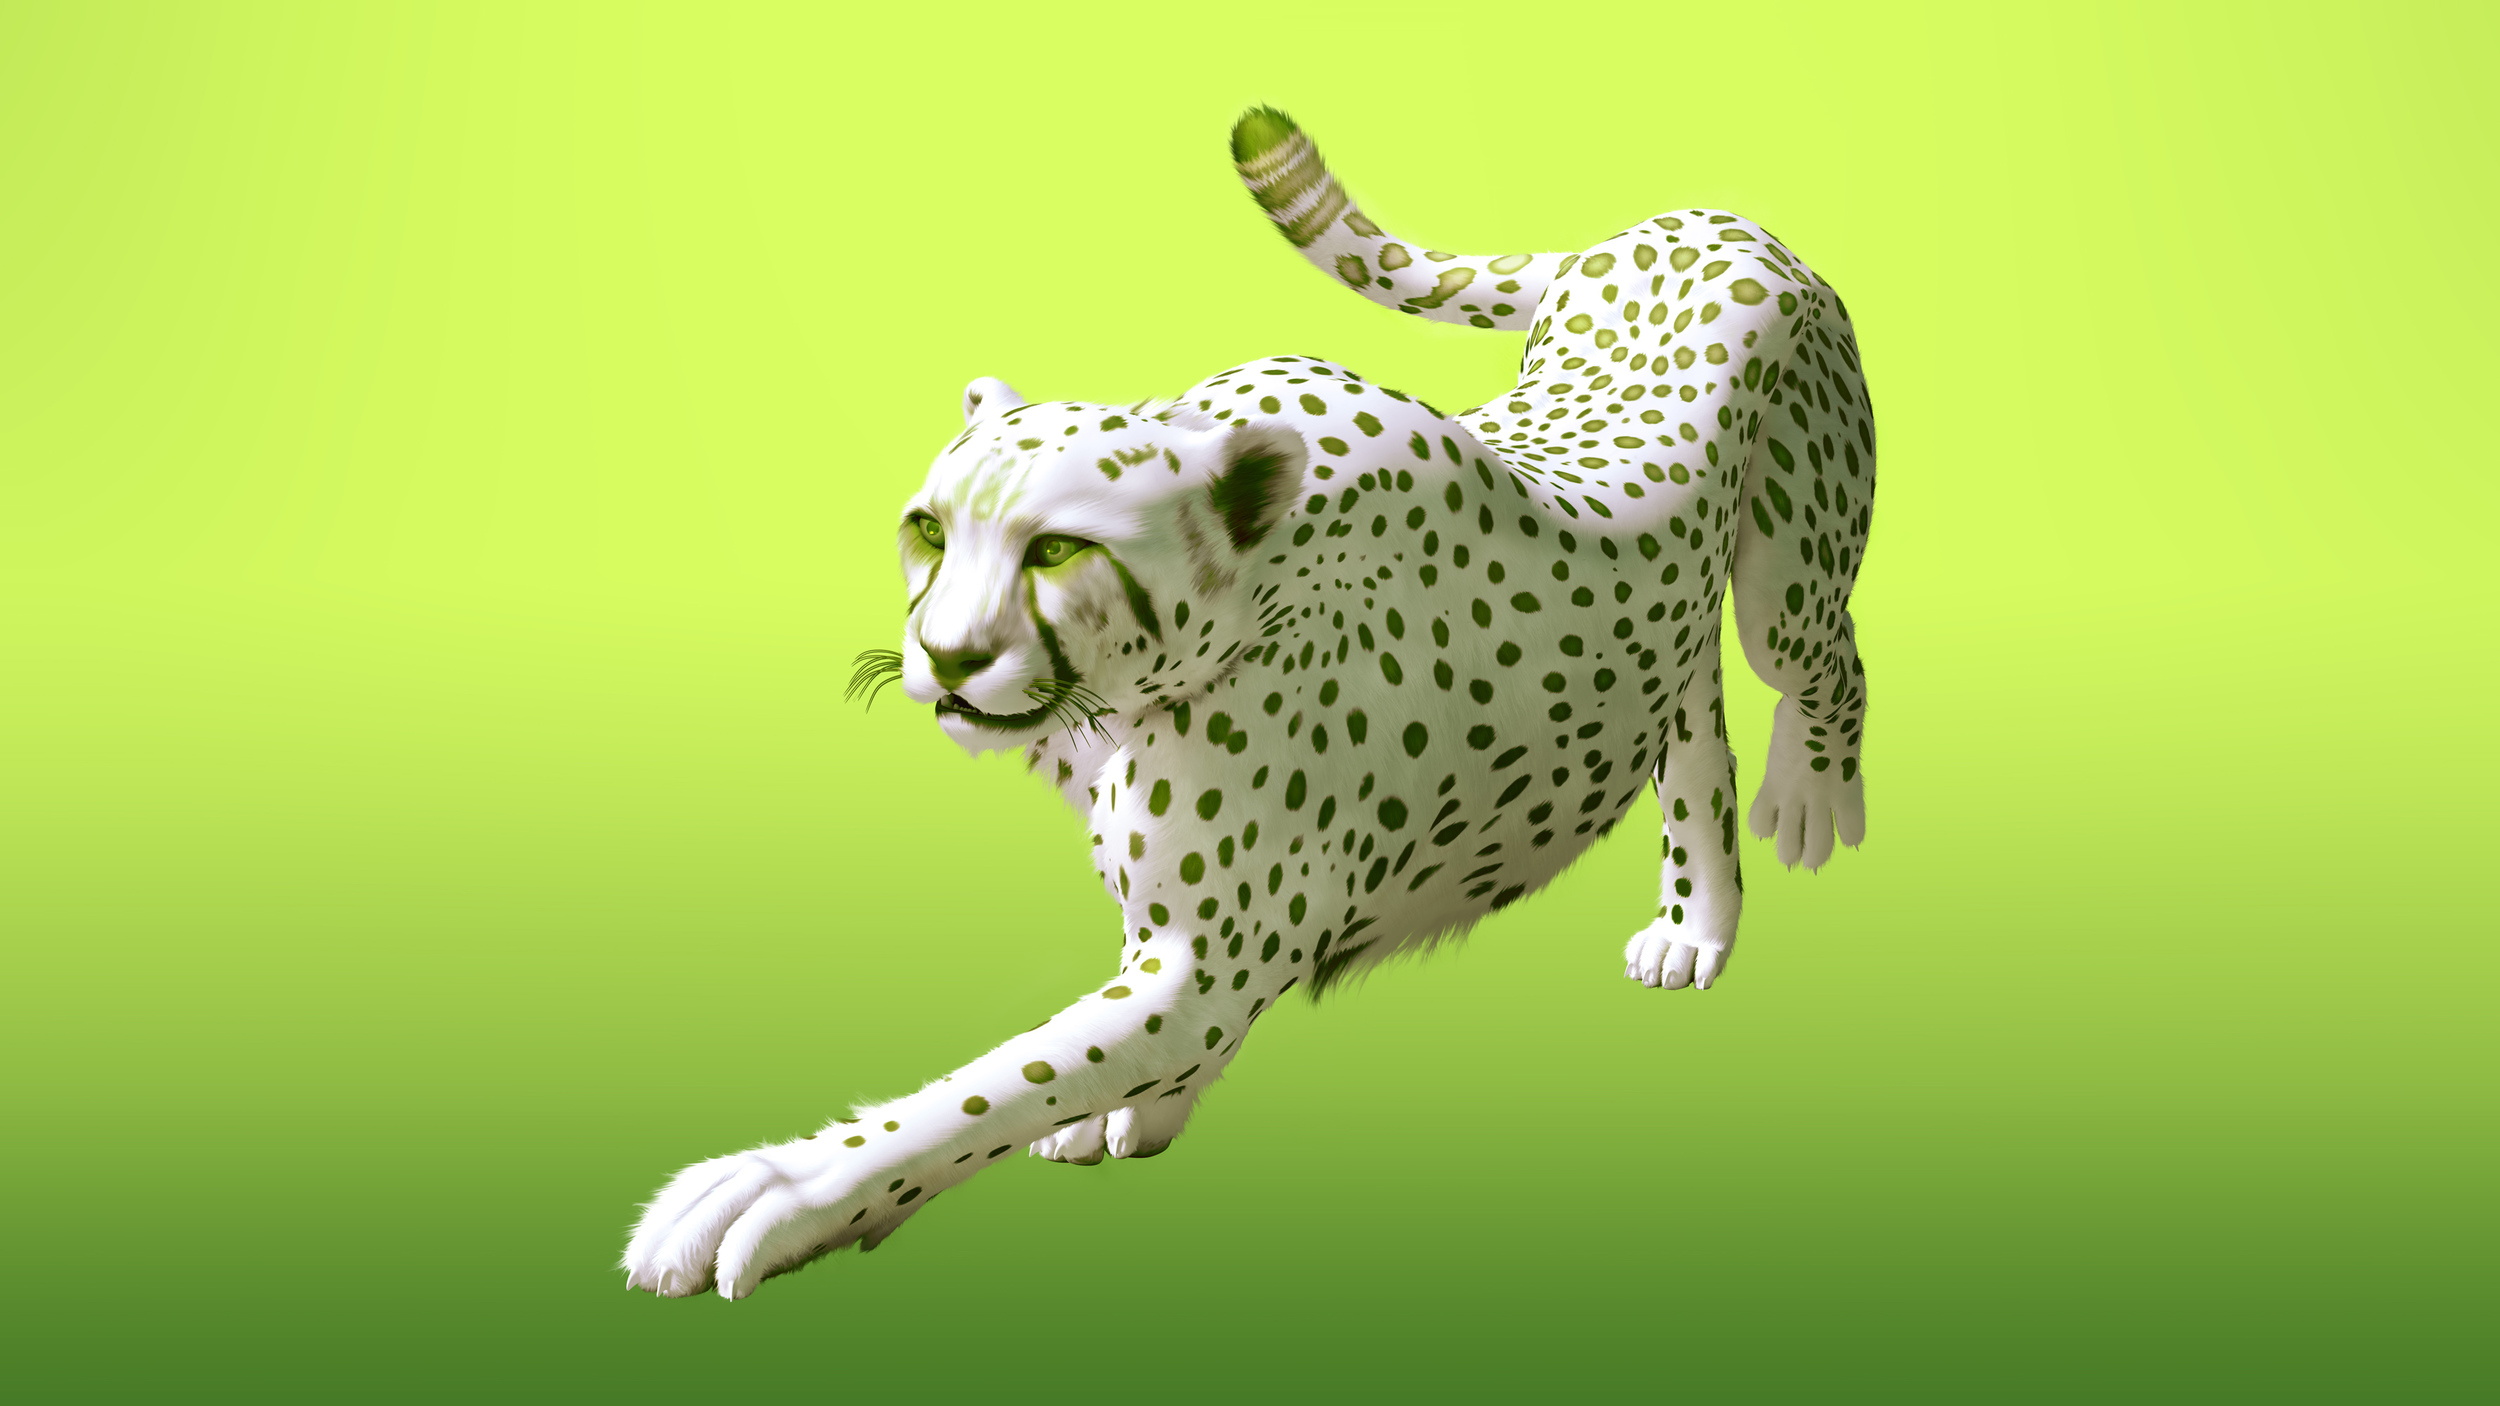 Cheetah2_v04_small.jpg